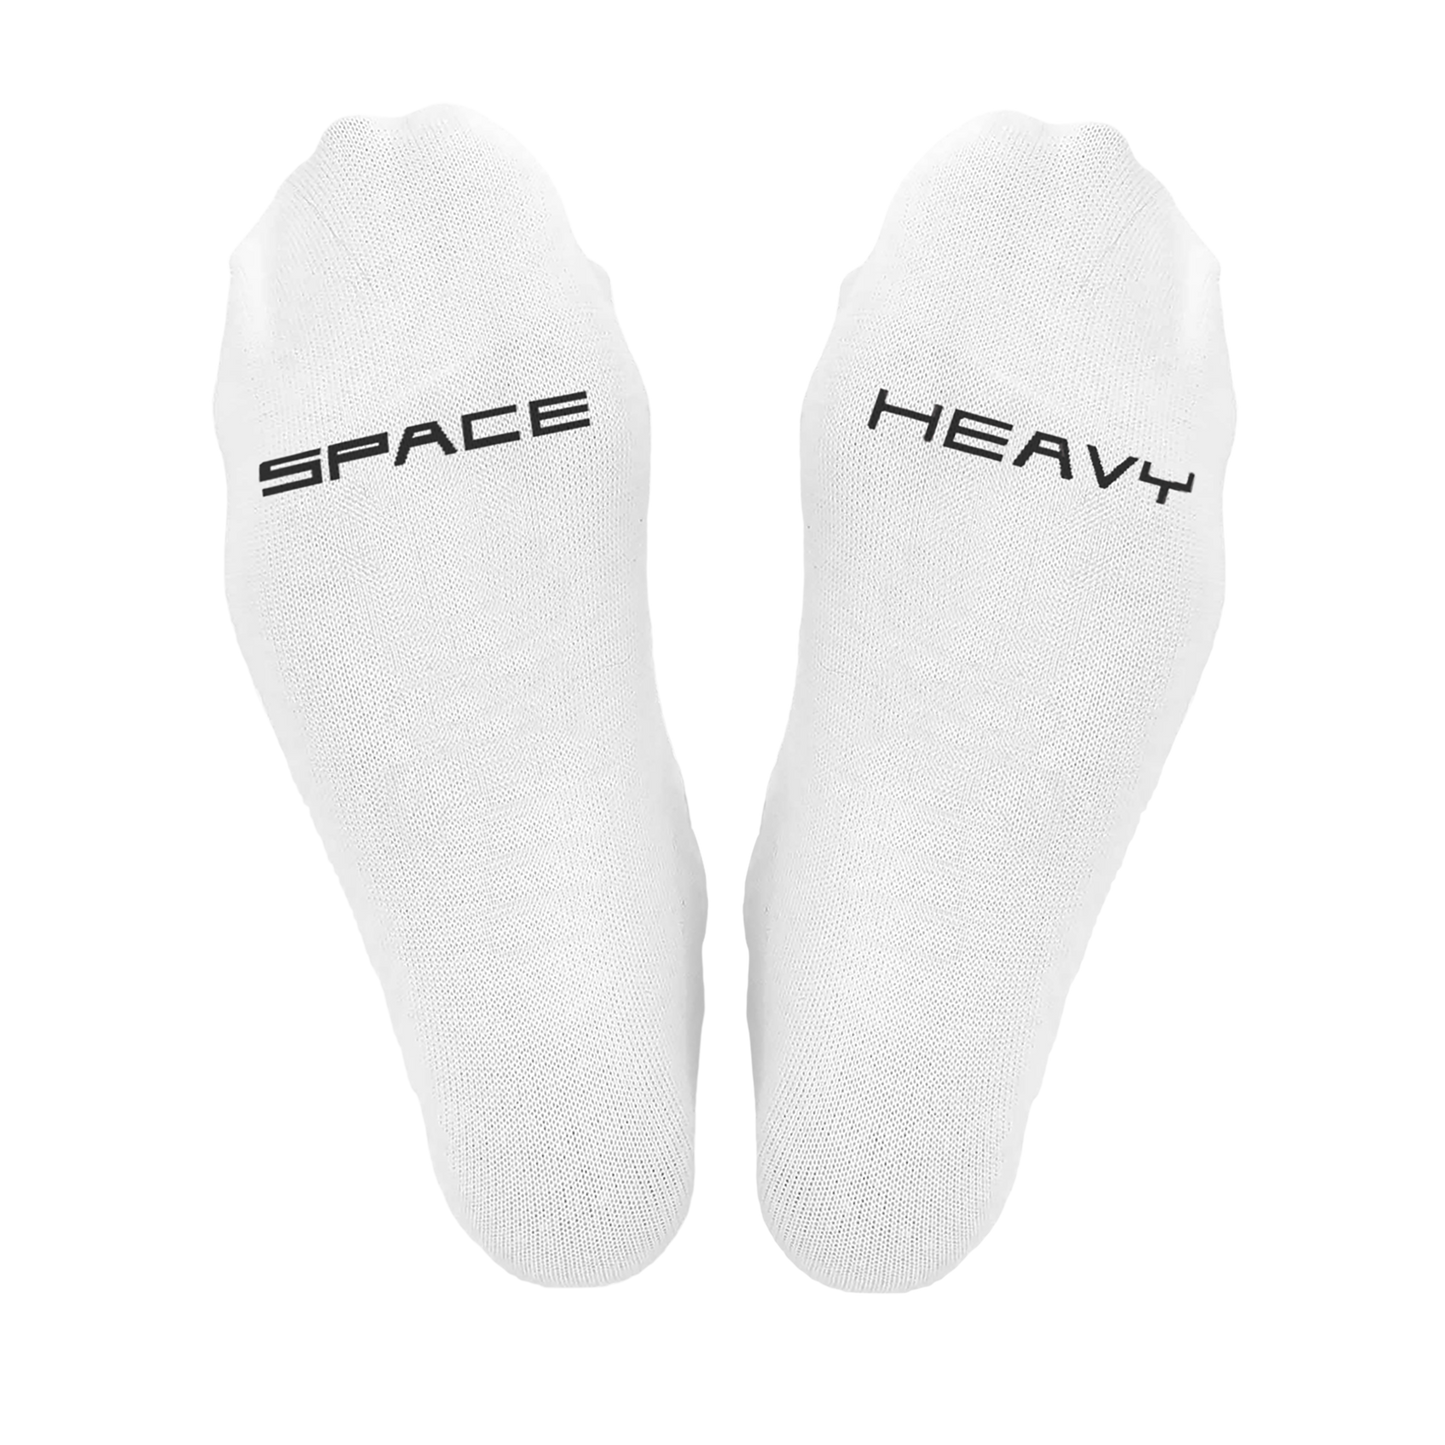 Space Heavy Socks